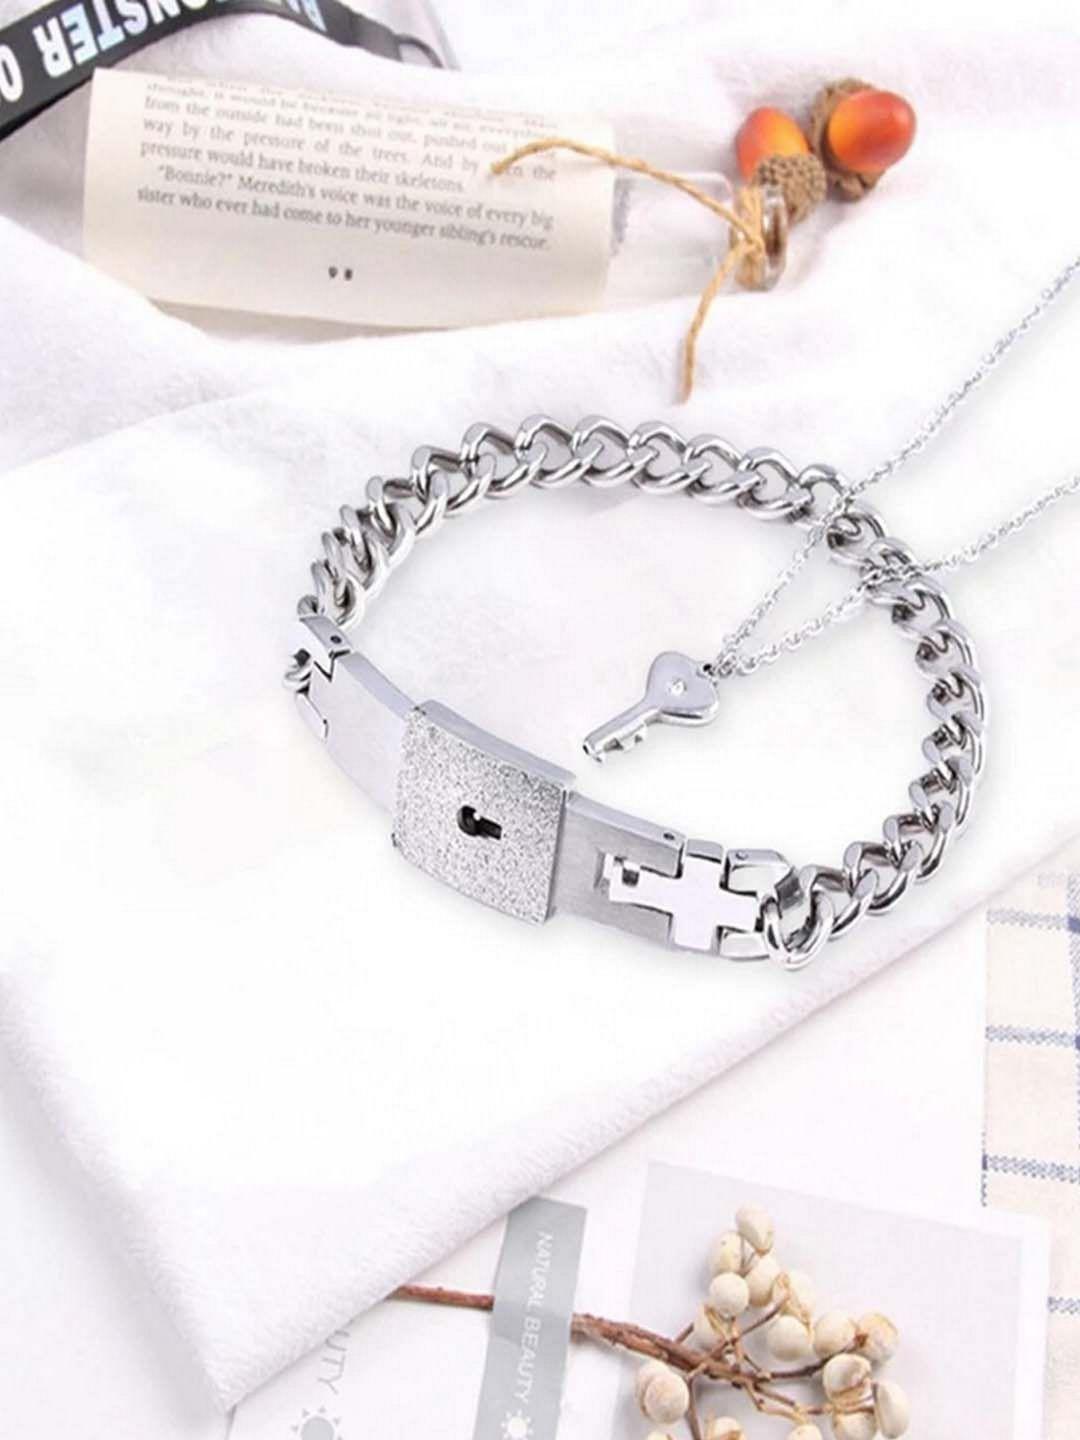 university trendz unisex stainless steel lock and key couple bracelet pendant necklace set